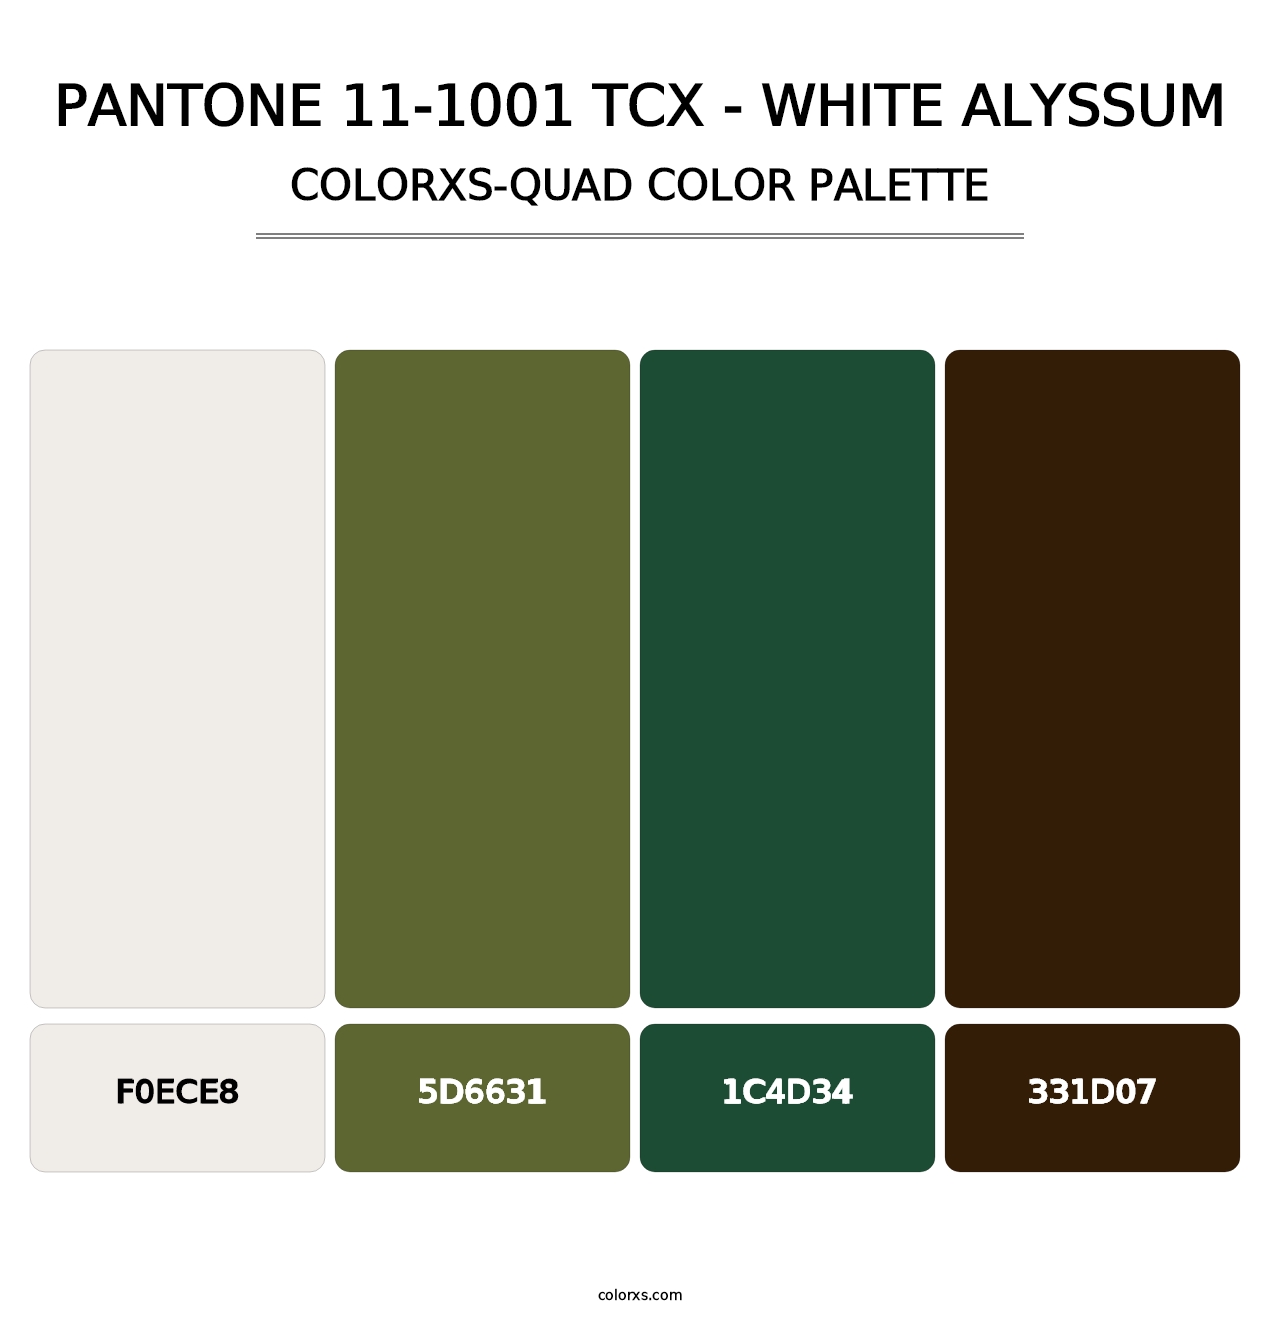 PANTONE 11-1001 TCX - White Alyssum - Colorxs Quad Palette